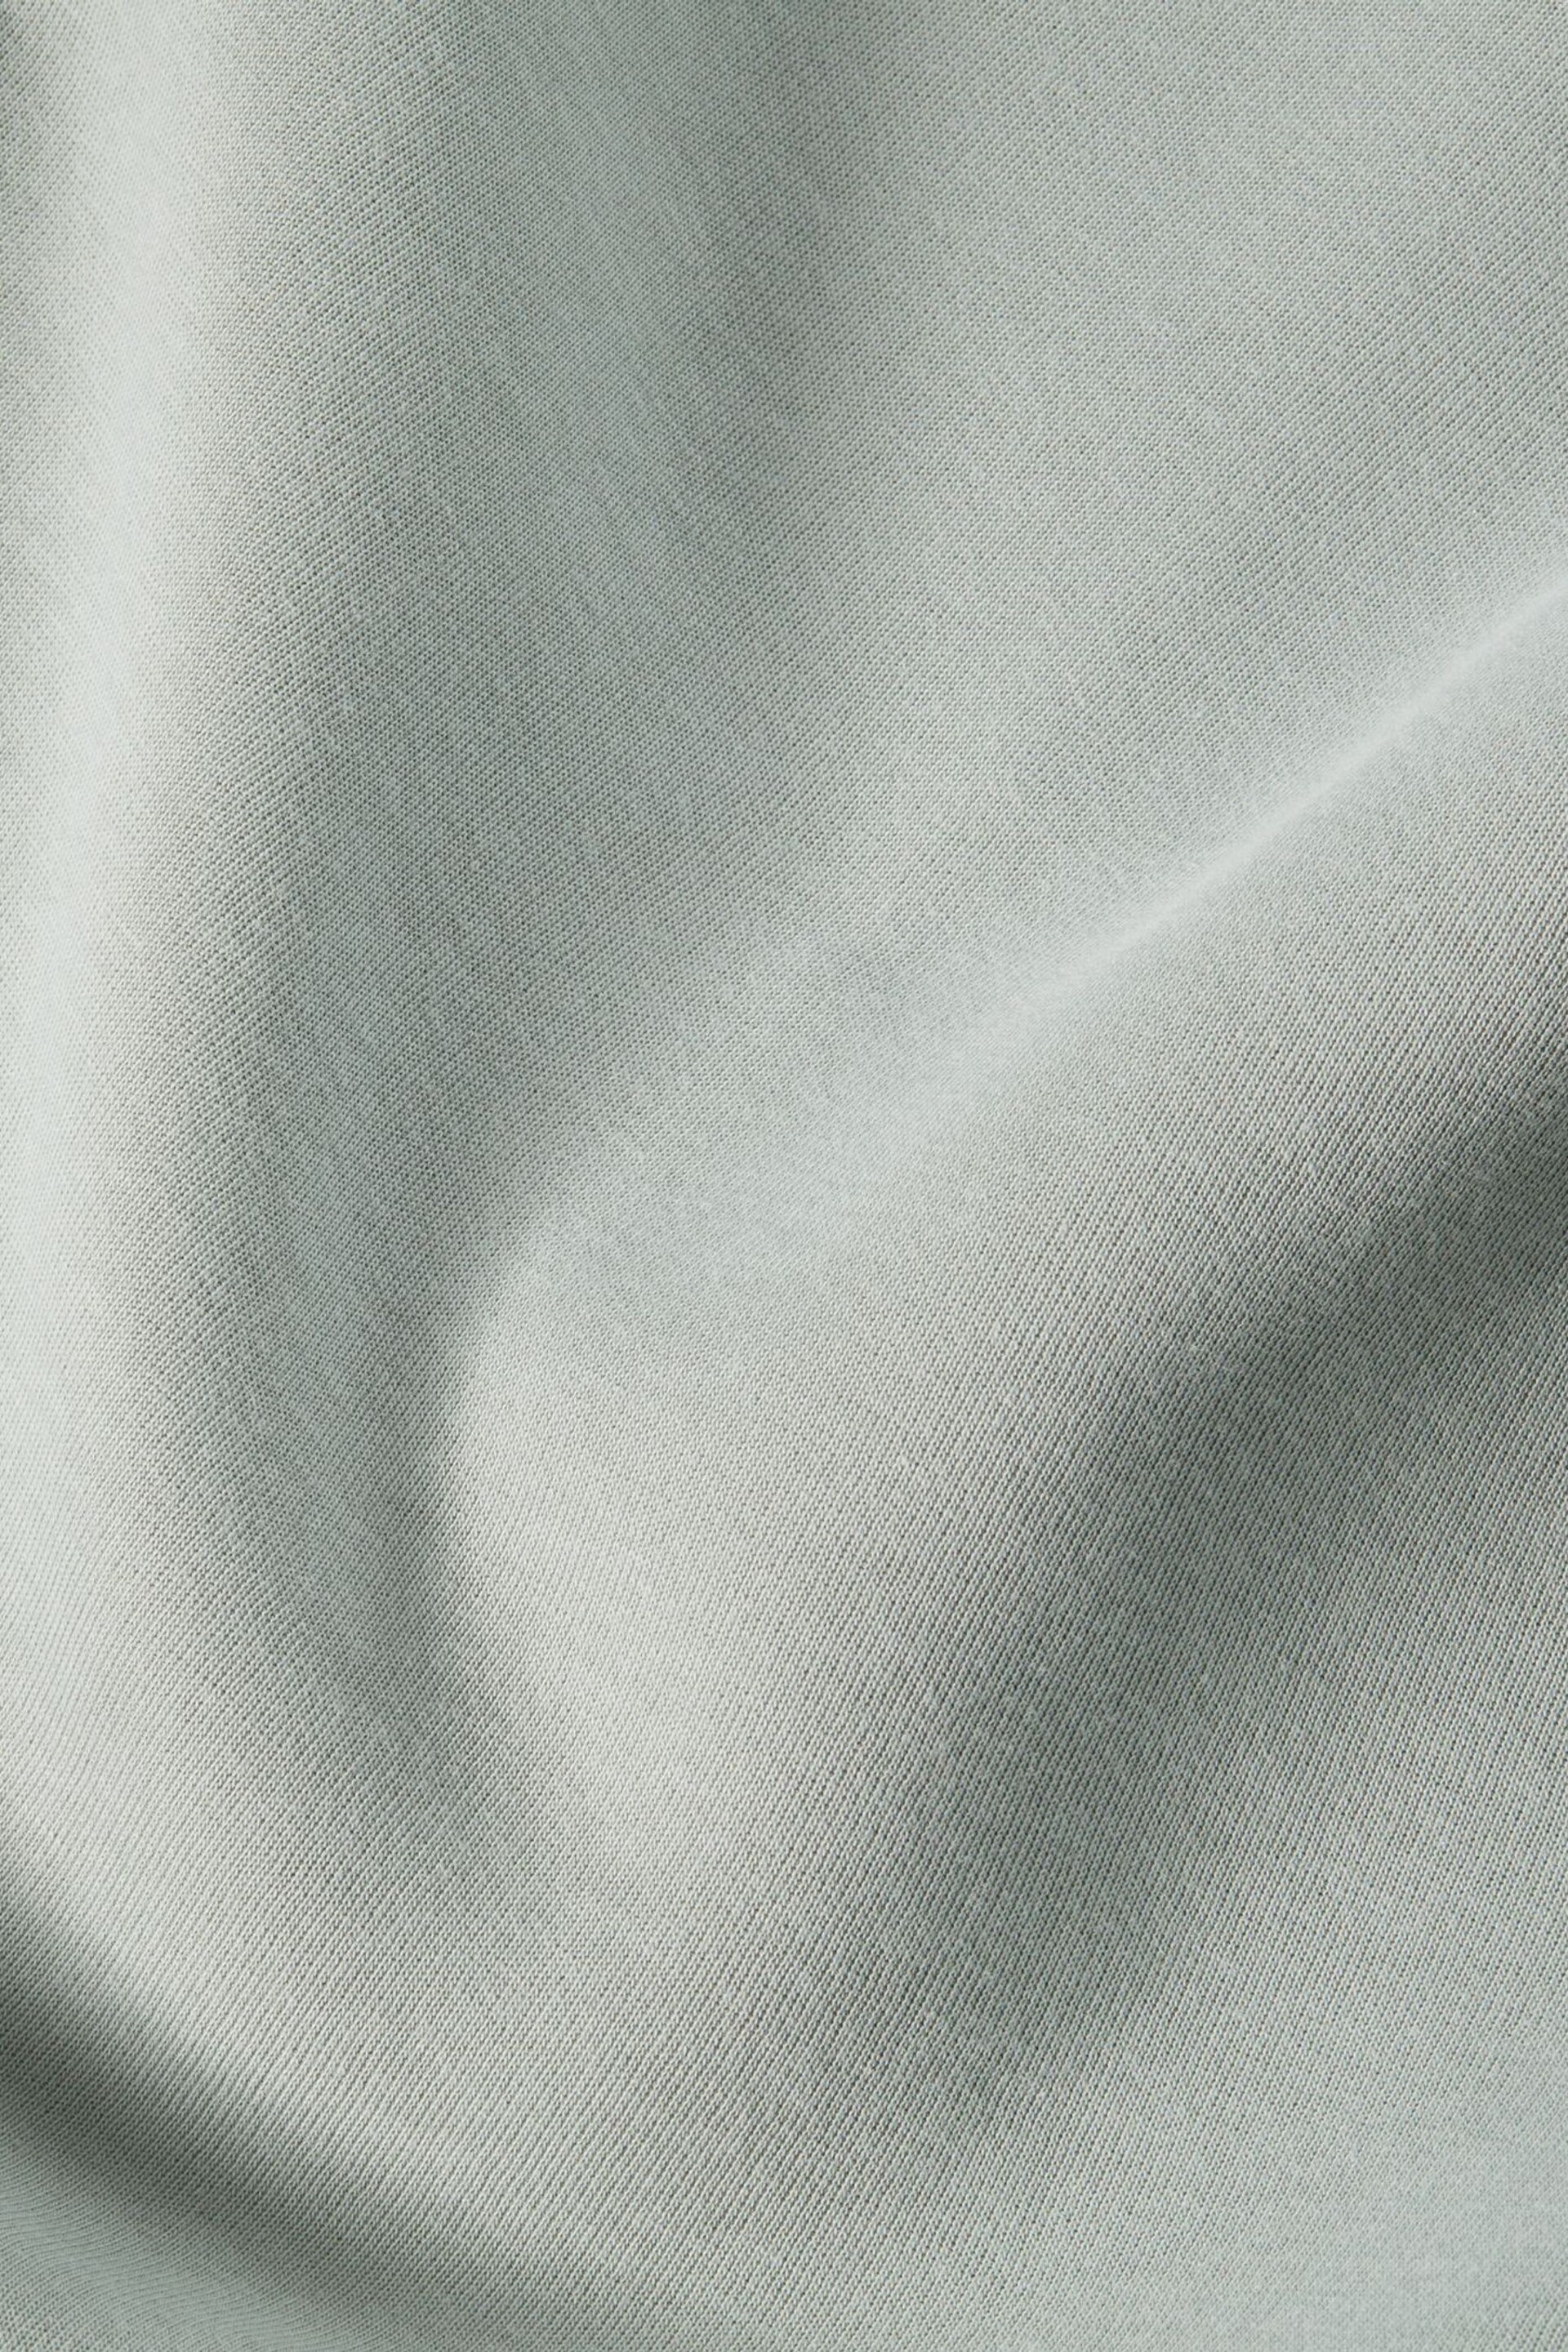 Nike Green Tech Fleece Pullover Hoodie - Image 10 of 10